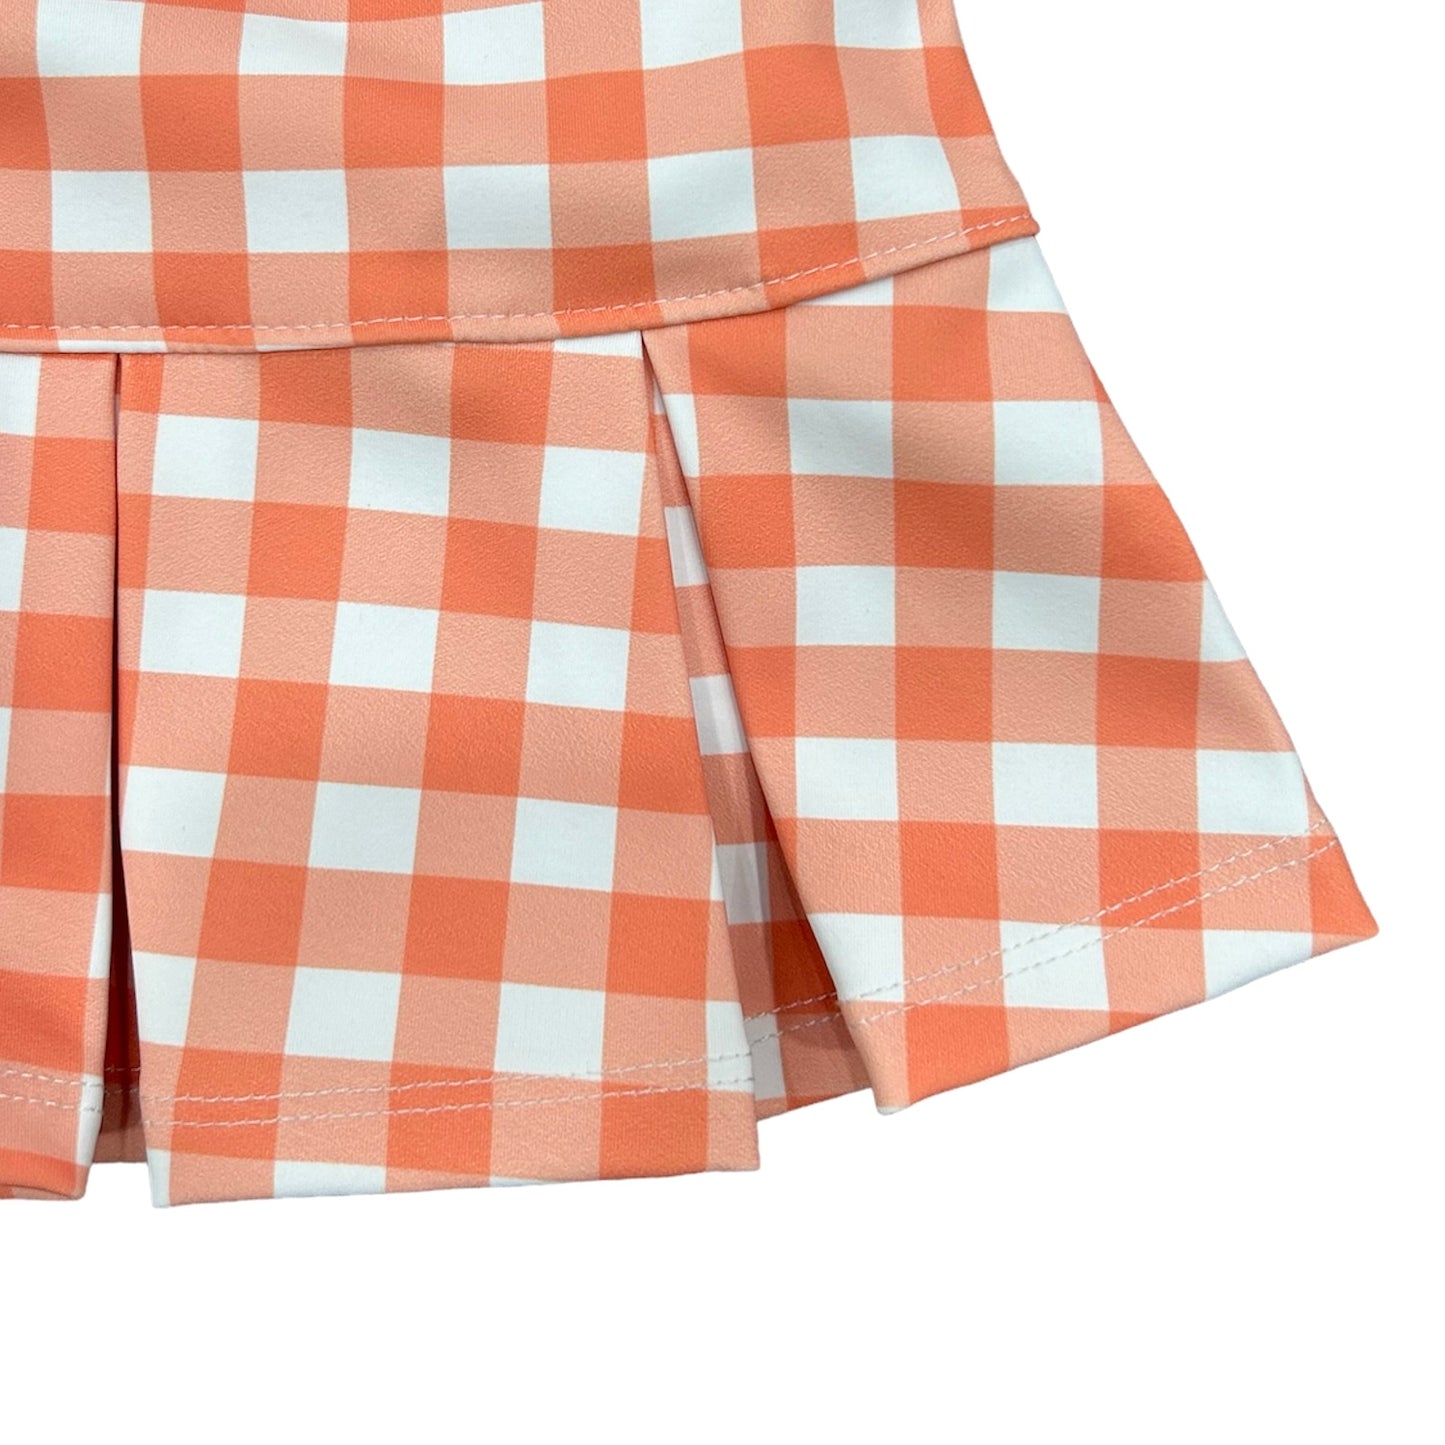 Pleated Tennis Skirt - Orangeade Gingham